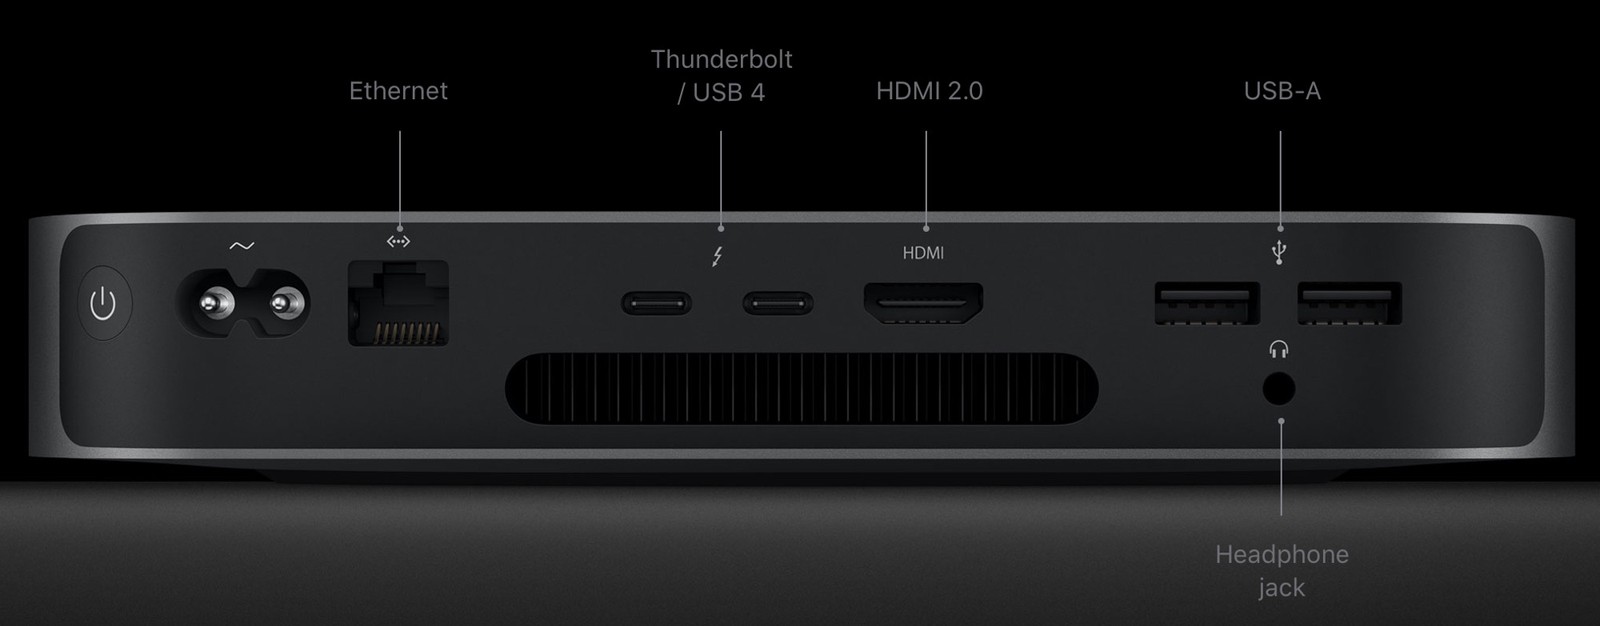 Mac mini: Just Updated! Apple M1 Chip, Starts at $699